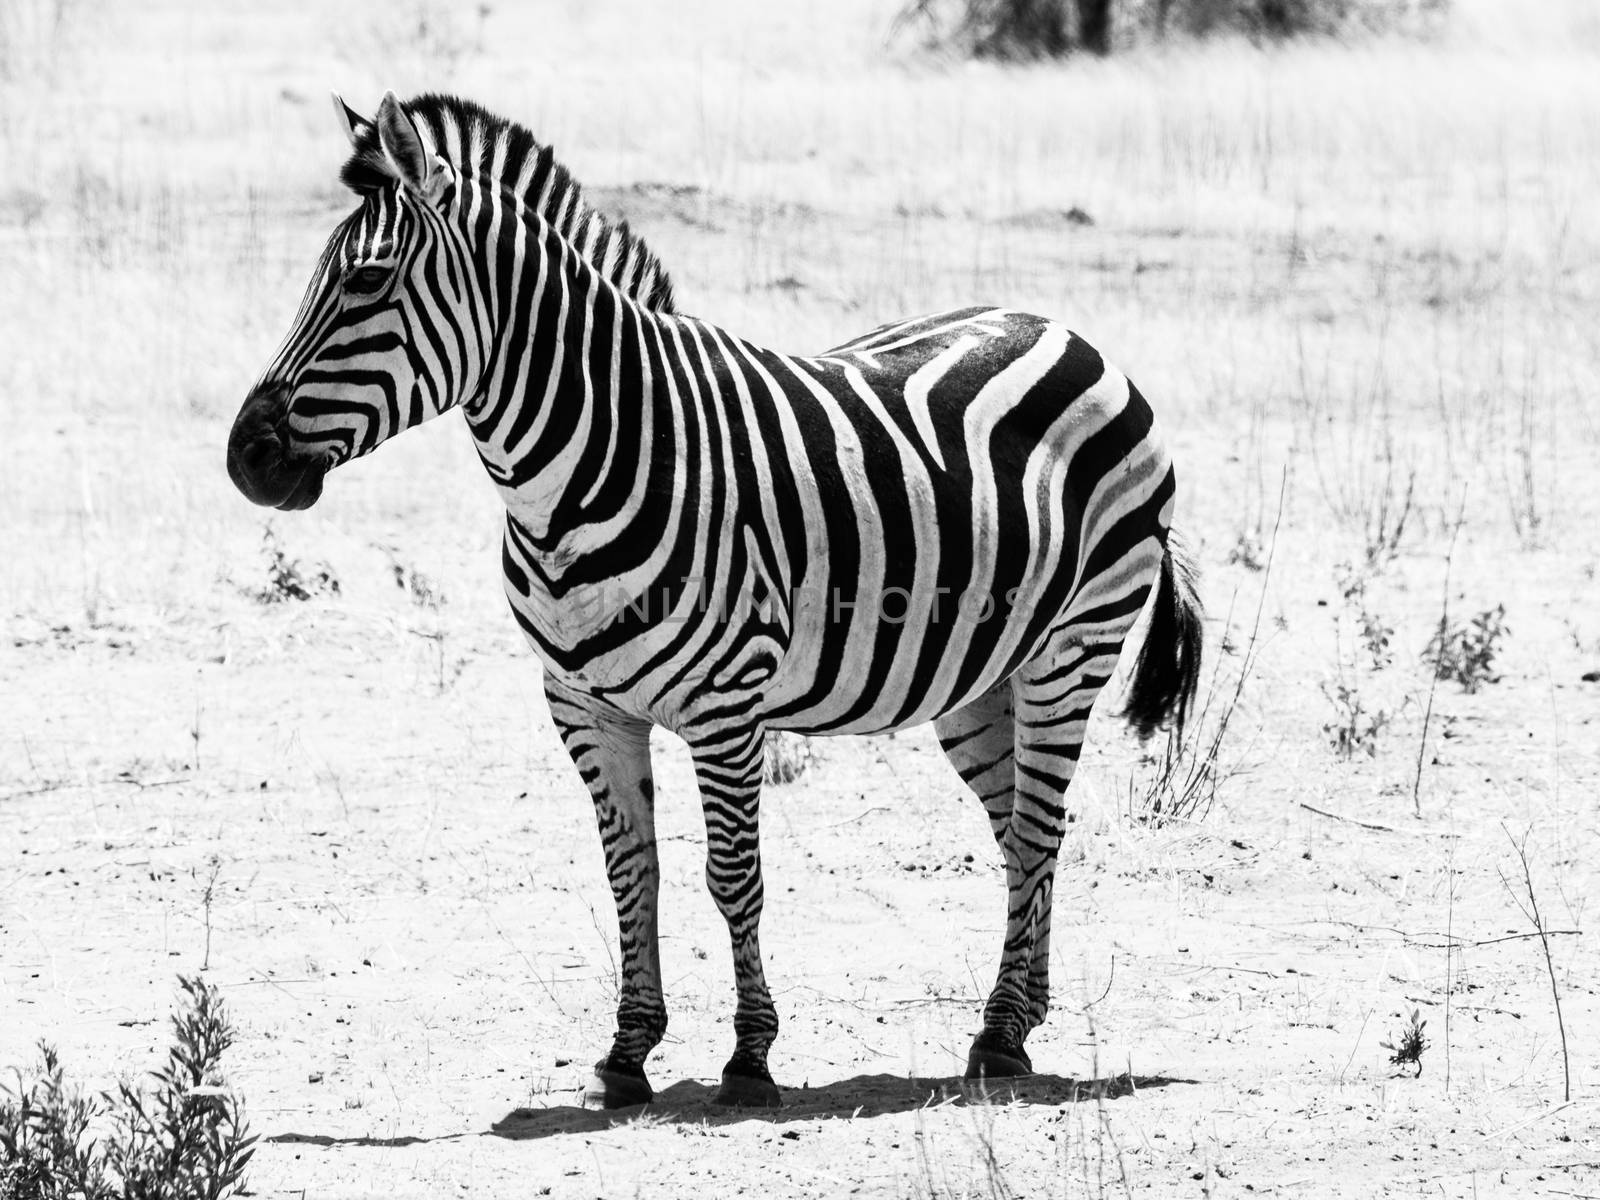 Zebra viewed on safari game drive (black and white)